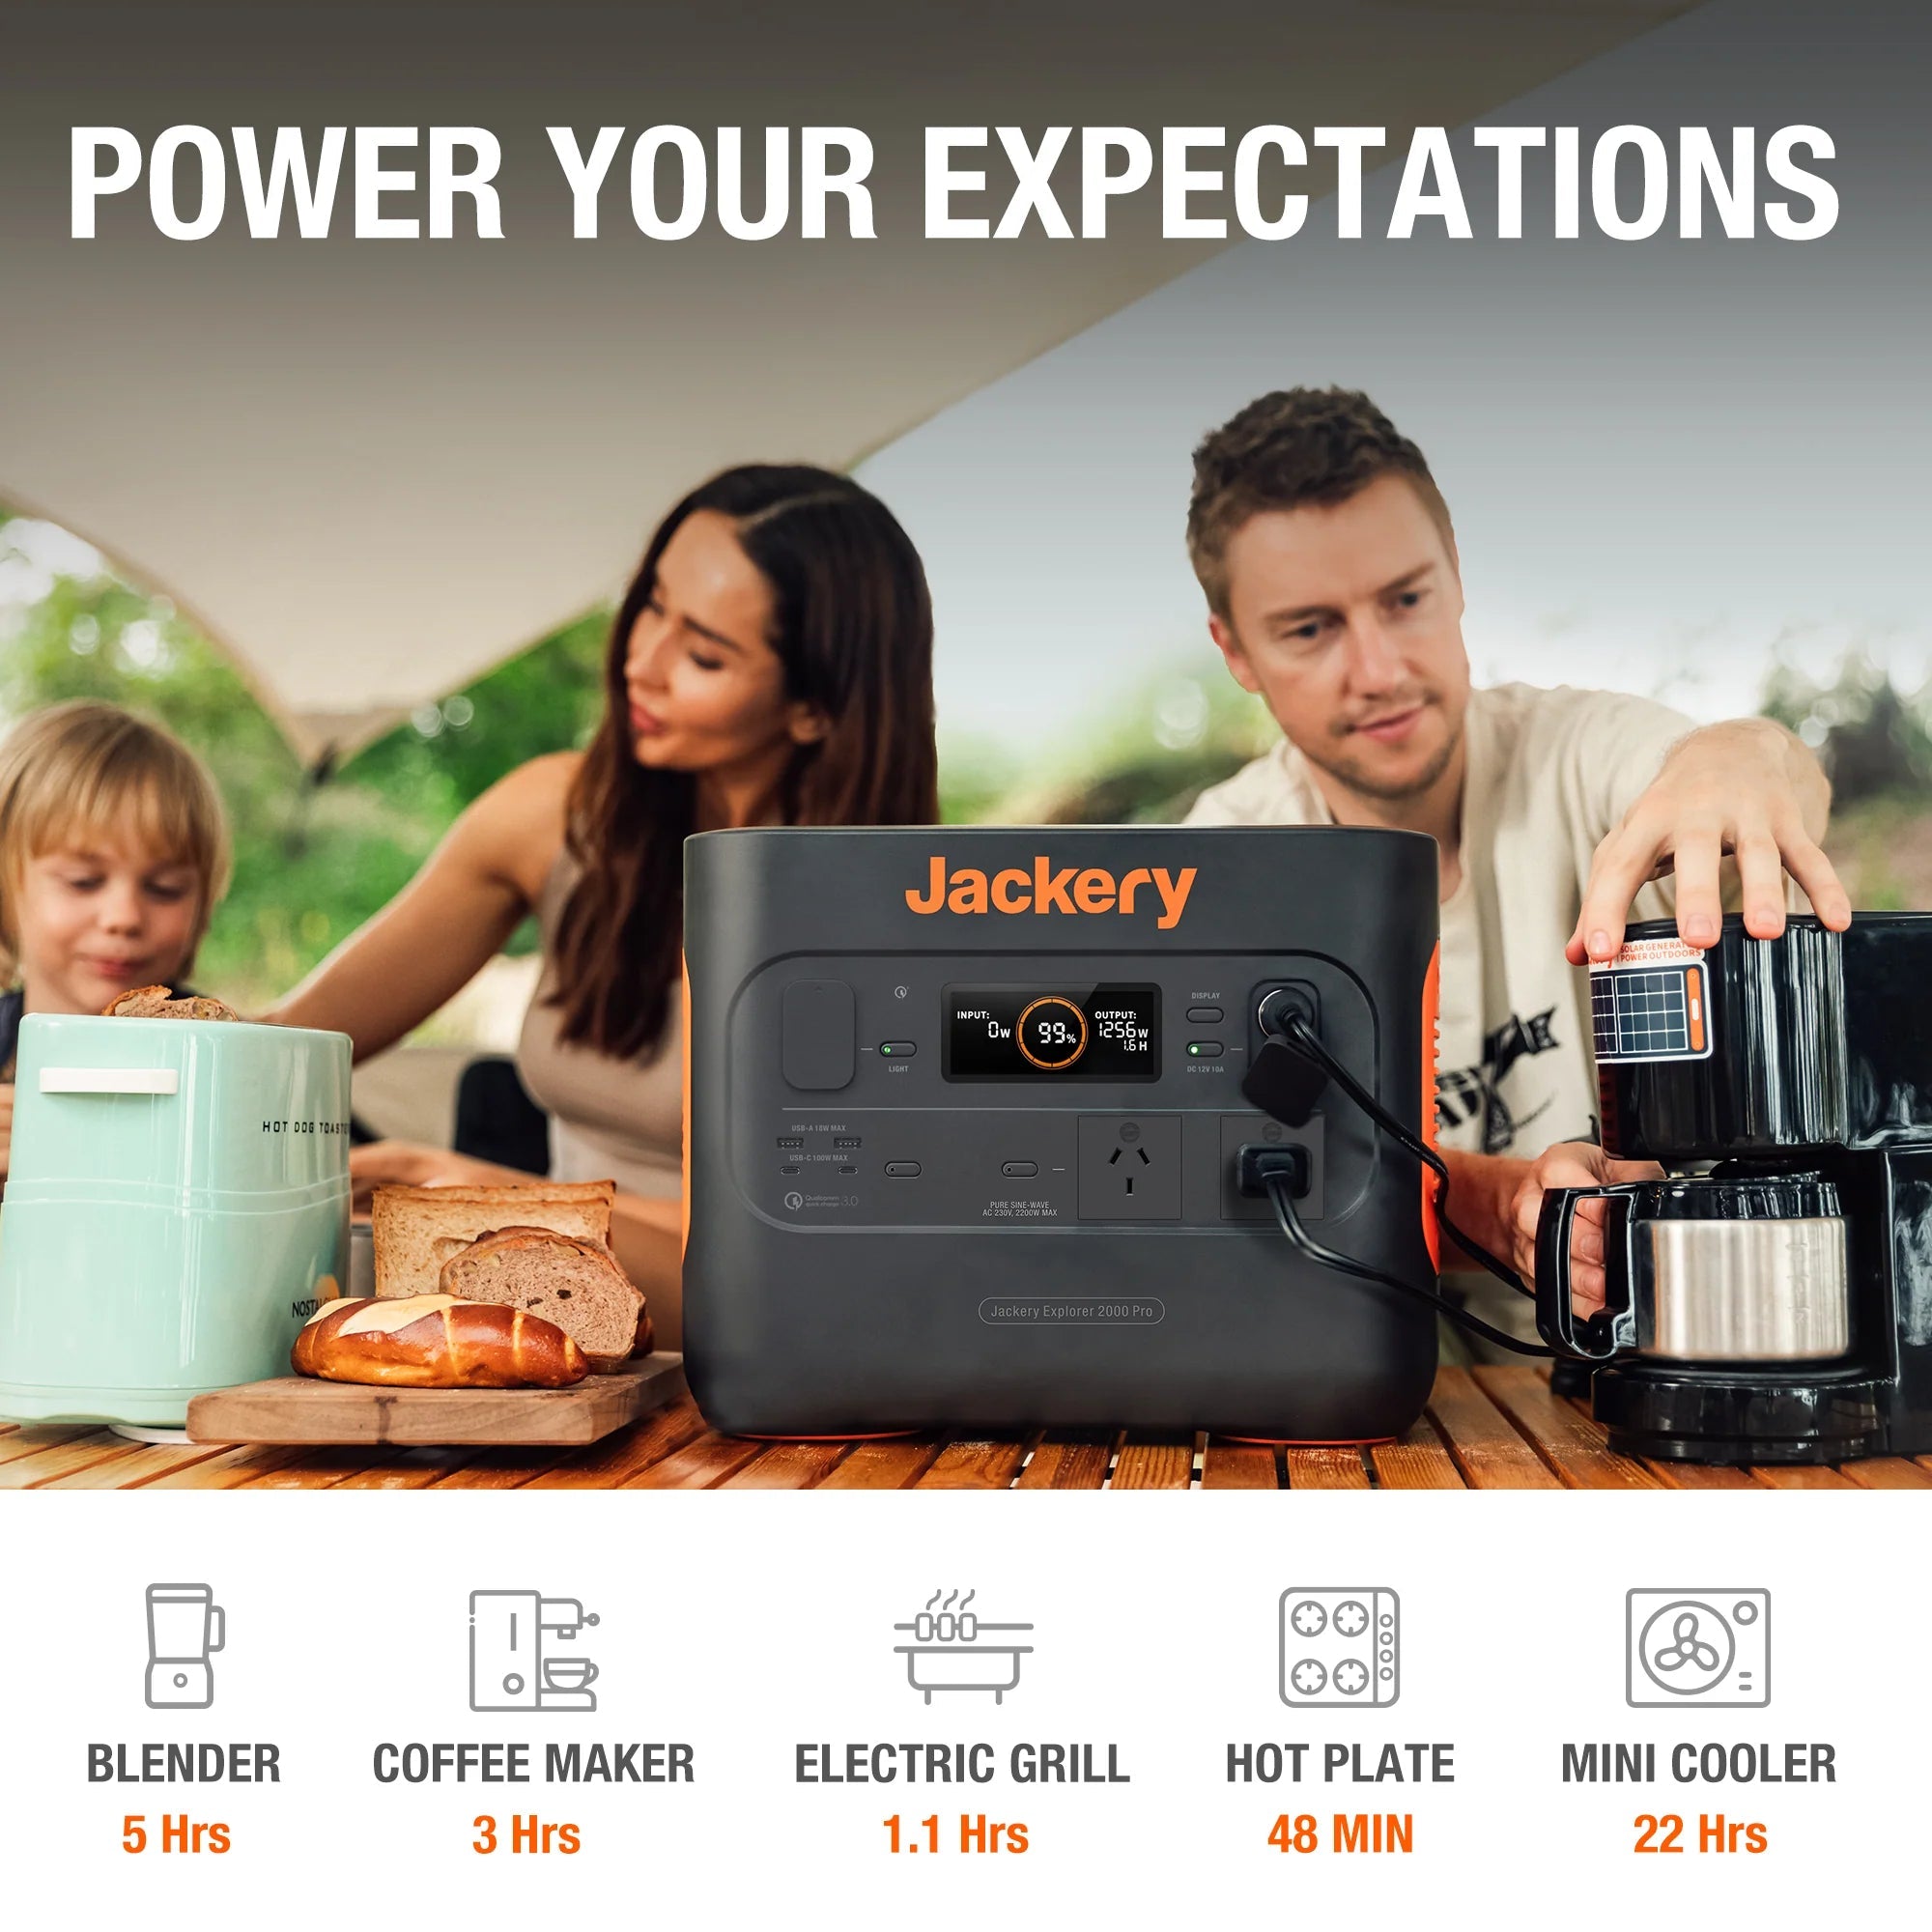 Jackery Explorer 2000Wh Pro Portable Power Station Outdoor & Survival Jackery Tactical Gear Supplier Tactical Distributors Australia